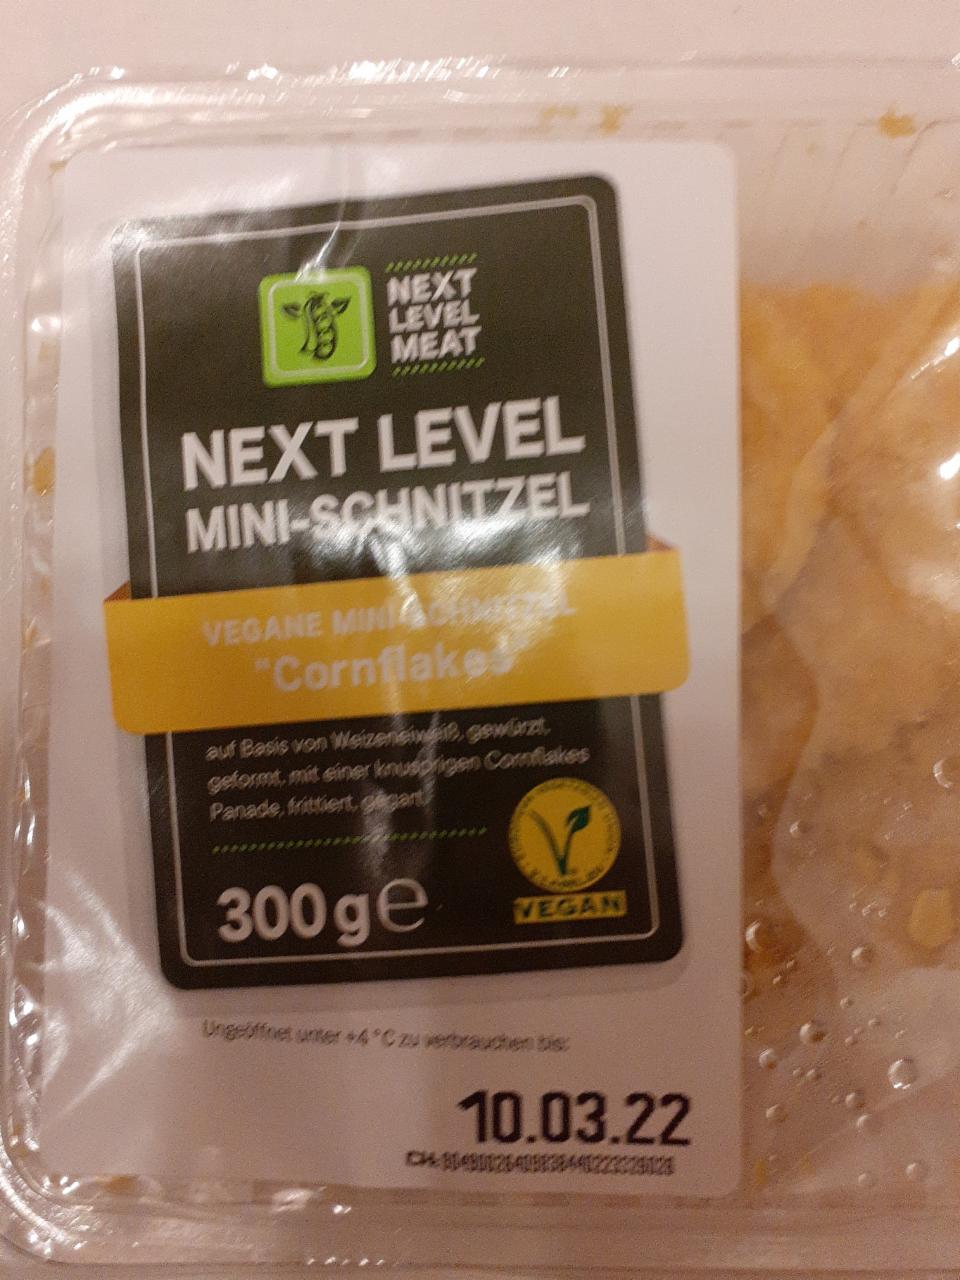 Fotografie - Vegan Mini Schnitzel Cornflakes Next Level Meat